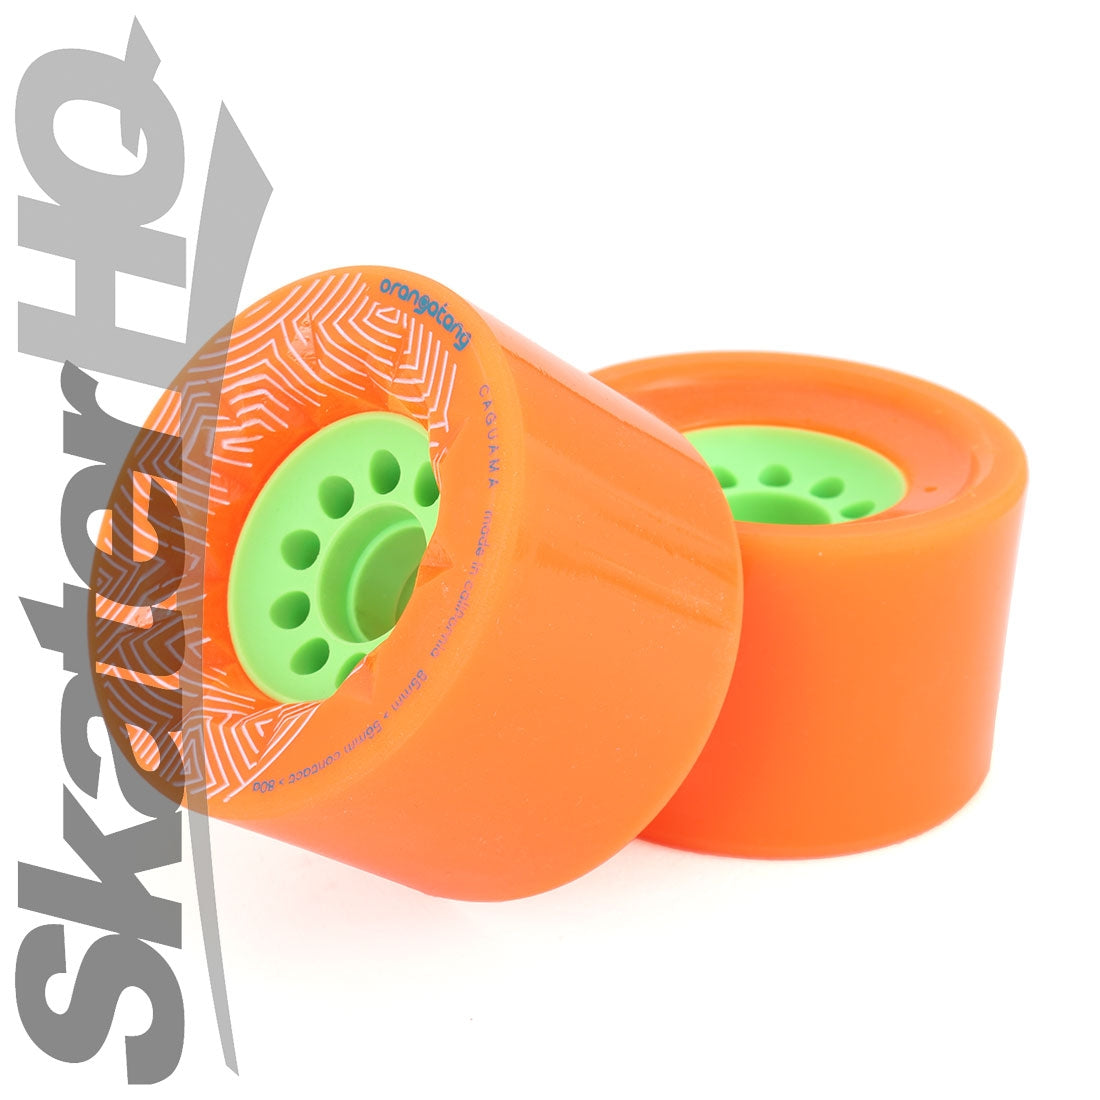 Orangatang Caguama 85mm/80a 4pk - Orange Skateboard Wheels